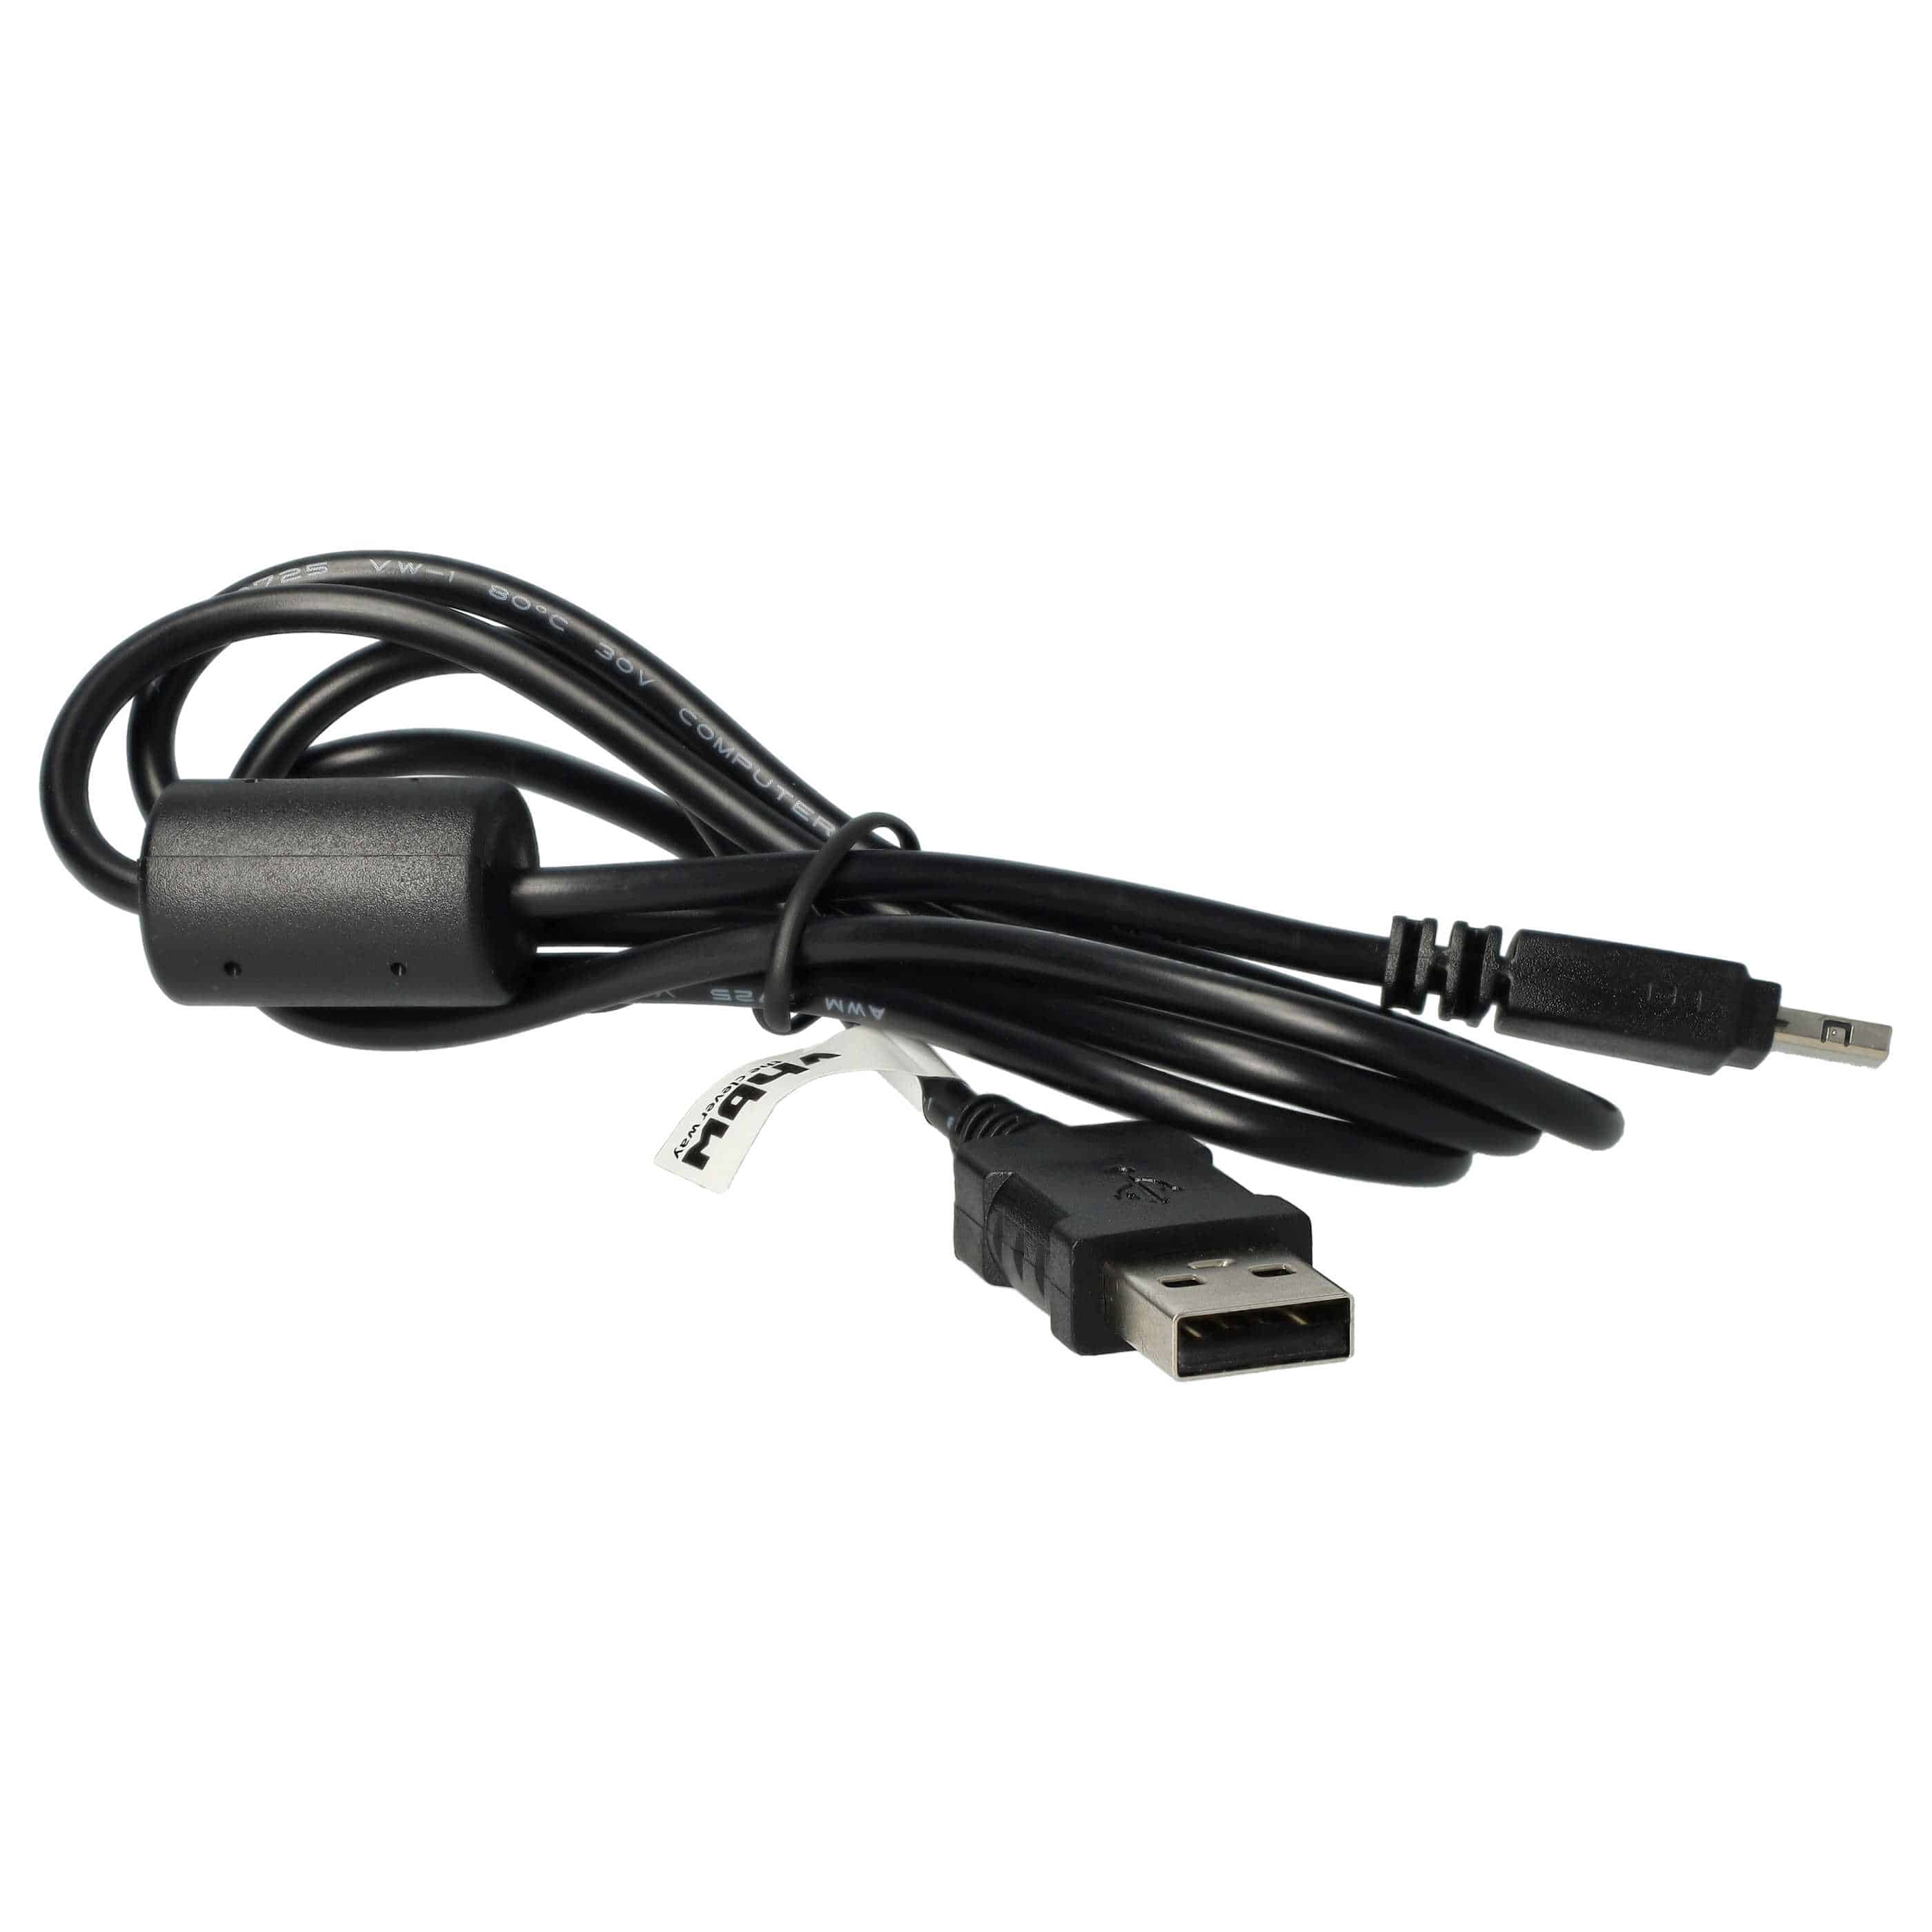 USB Datenkabel als Ersatz für Casio U-8, EMC-6U, EMC-6 Kamera - 100 cm